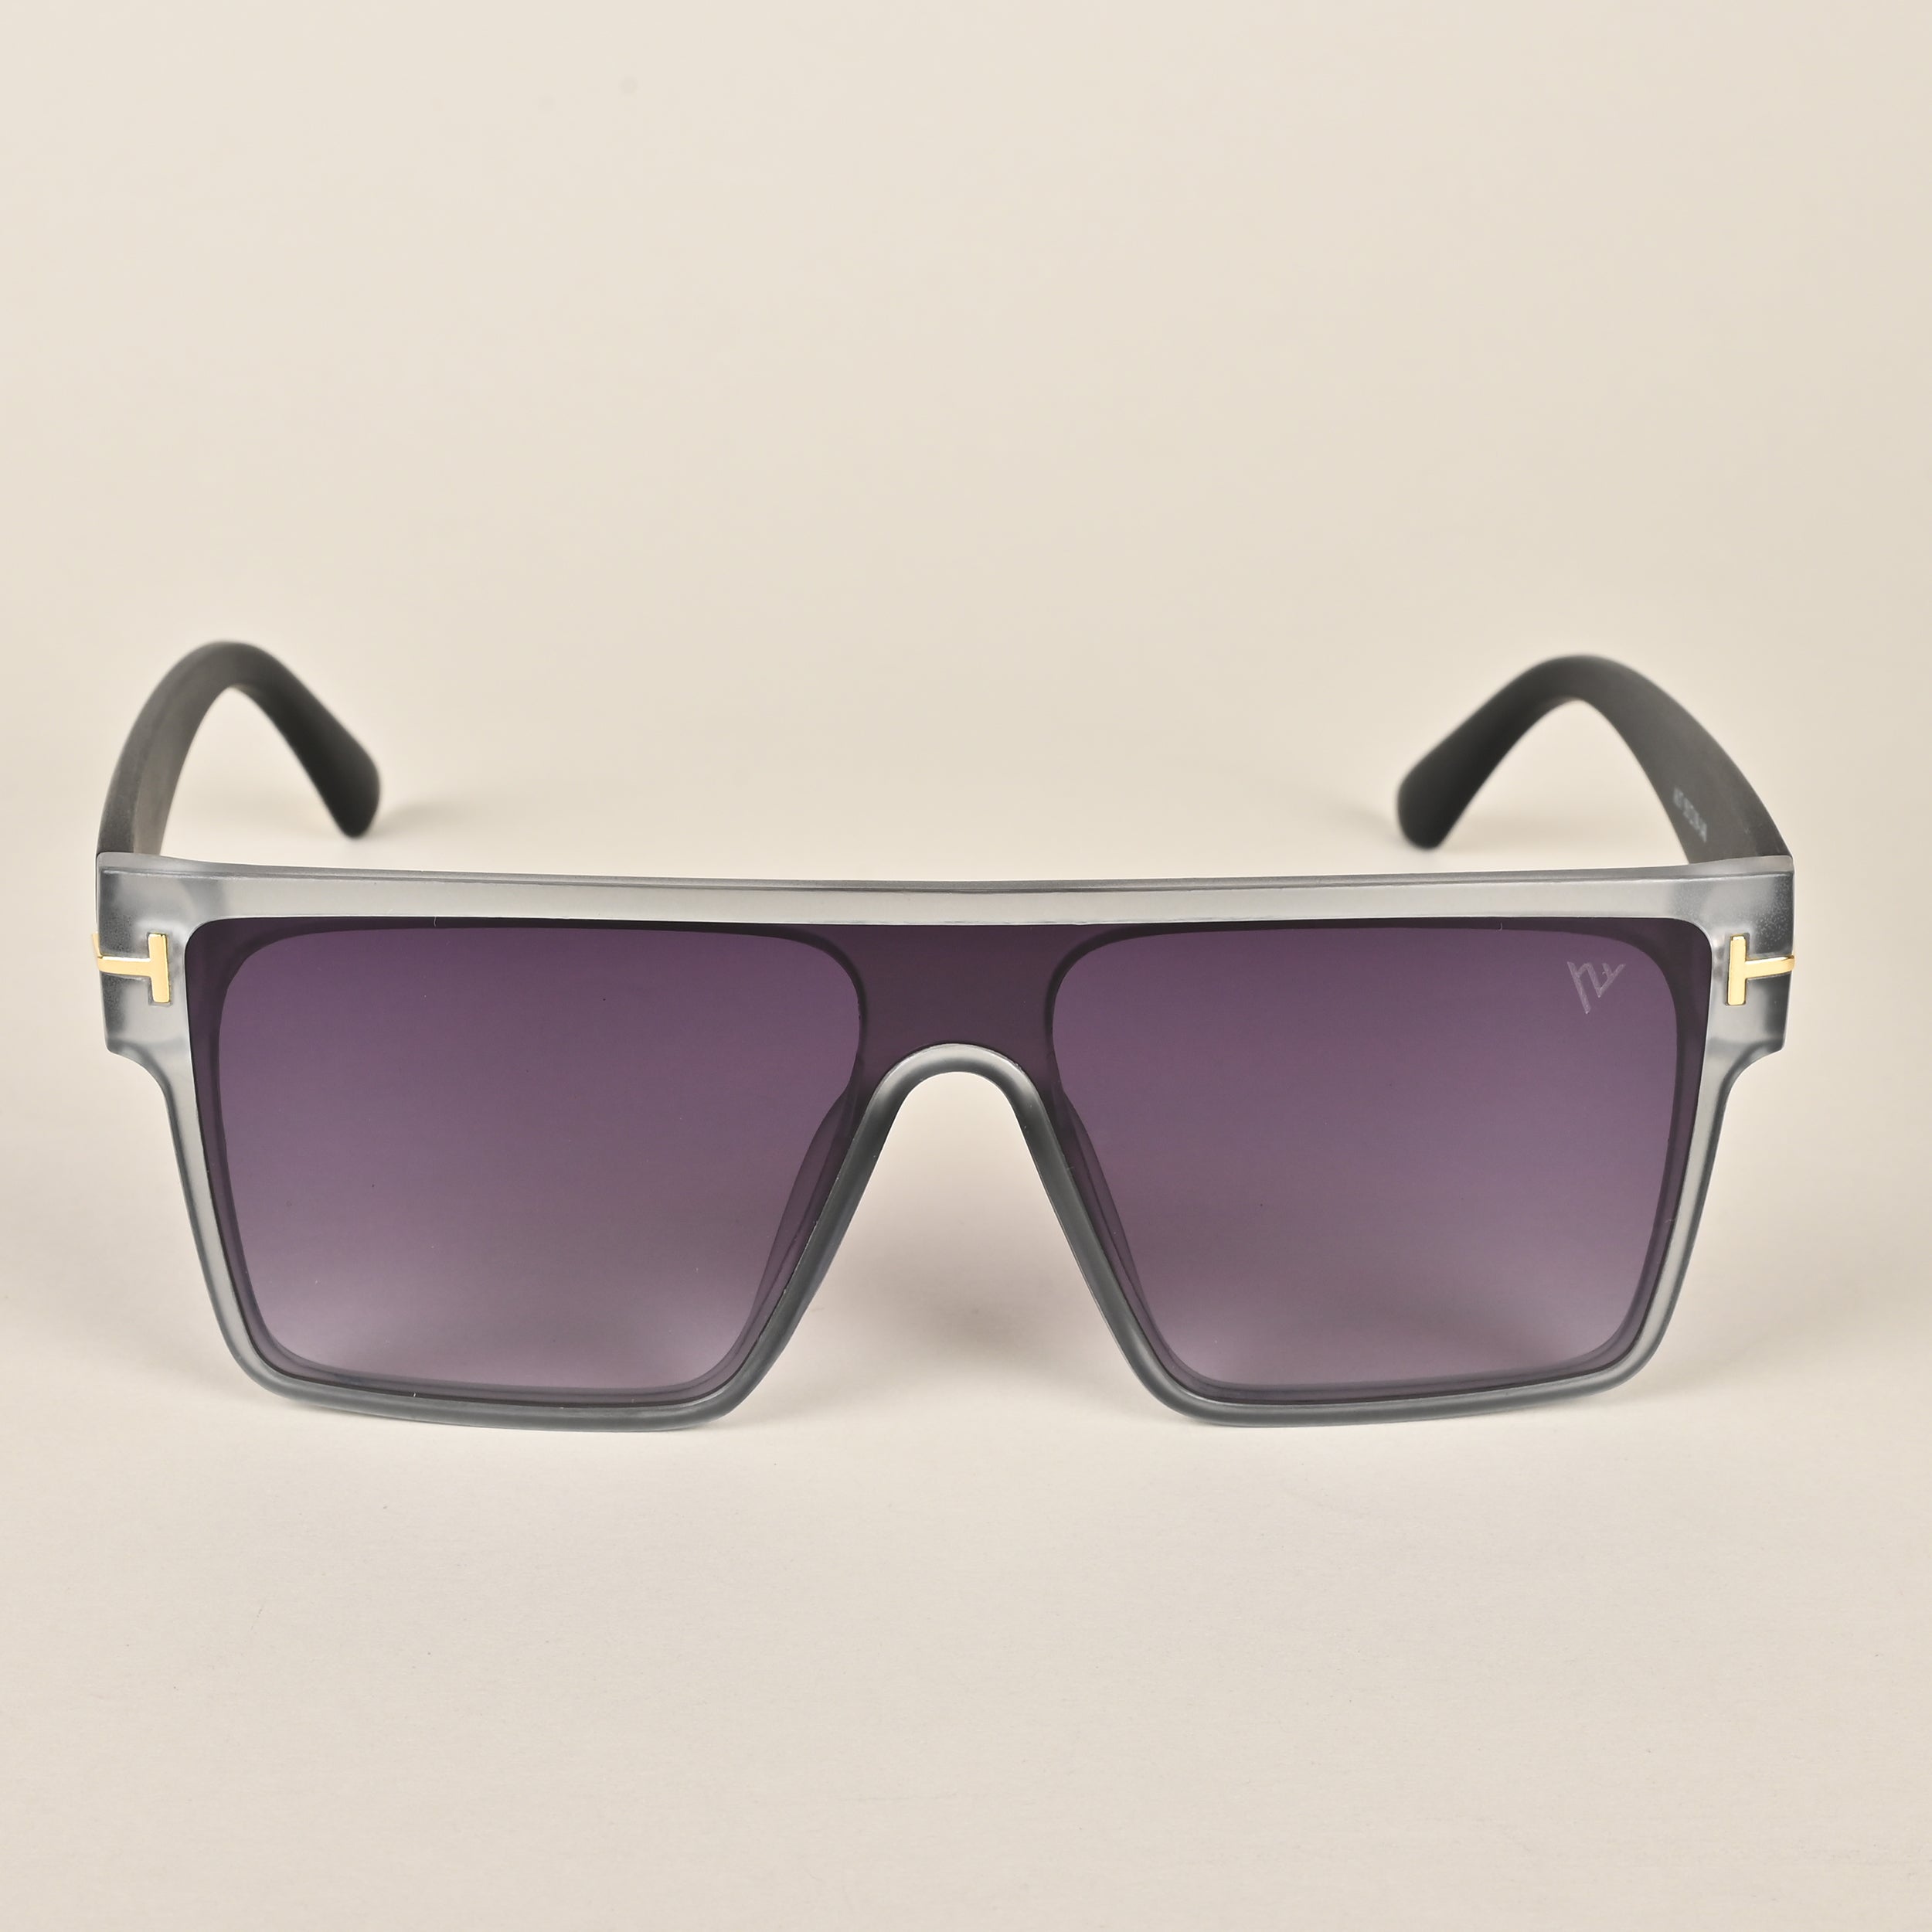 Voyage Grey Wayfarer Sunglasses (A17MG3937)